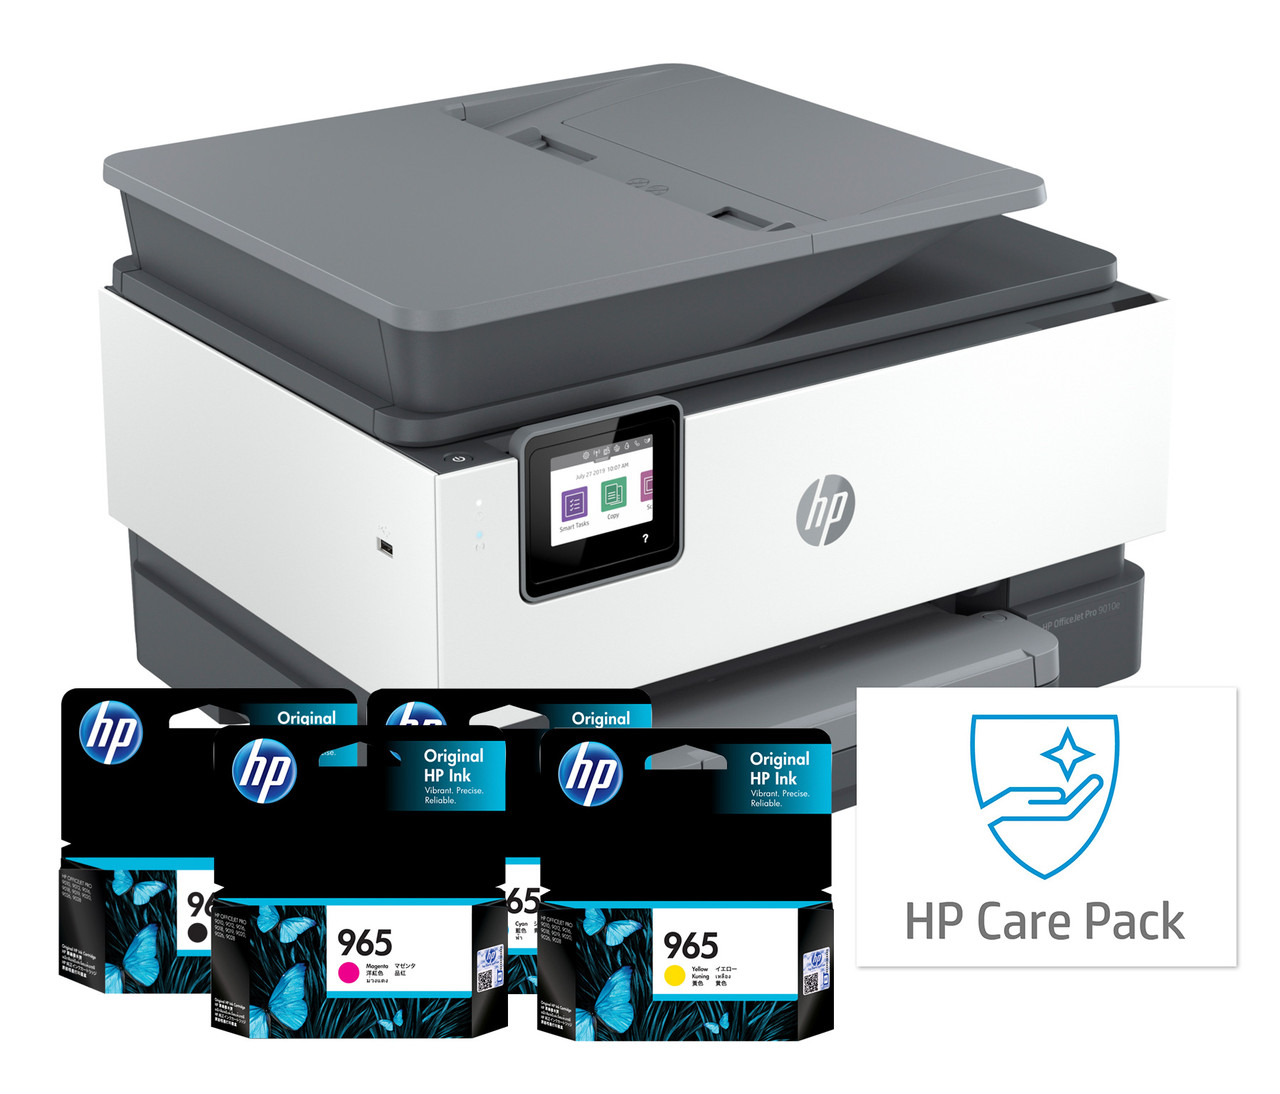 HP OfficeJet Pro 9010 All-in-One Wireless Printer, Print, Copy